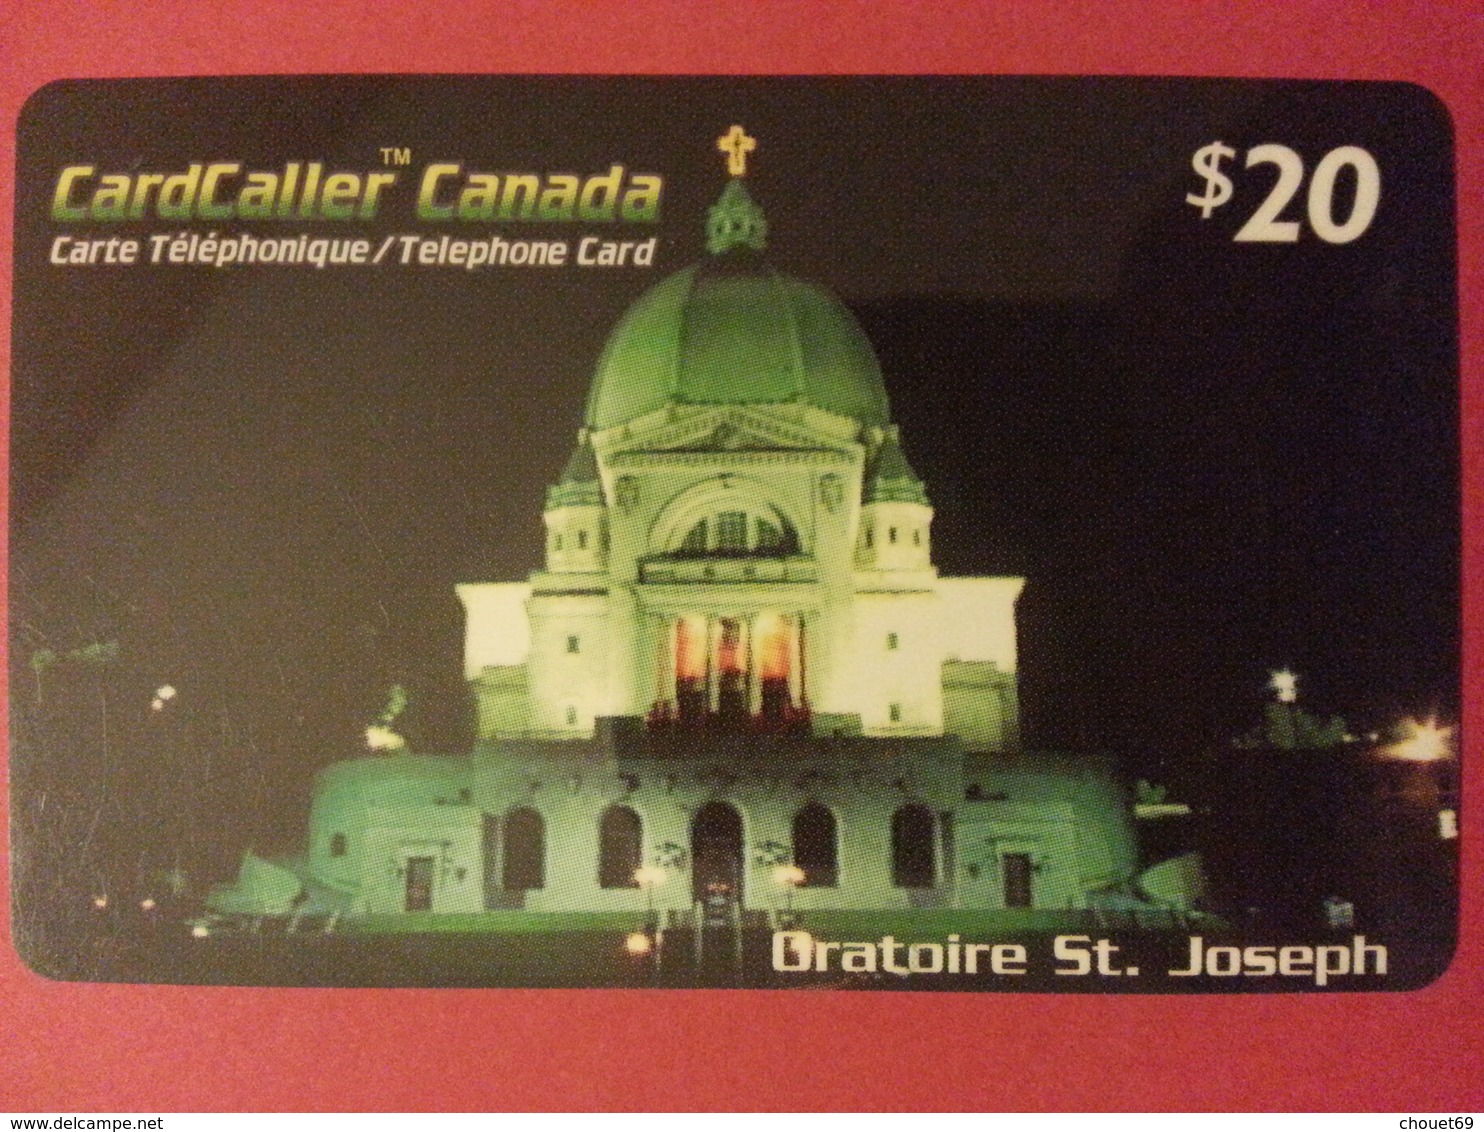 Cardcaller Canada Prepaid Oratoire St Joseph  (B0615 - Origen Desconocido